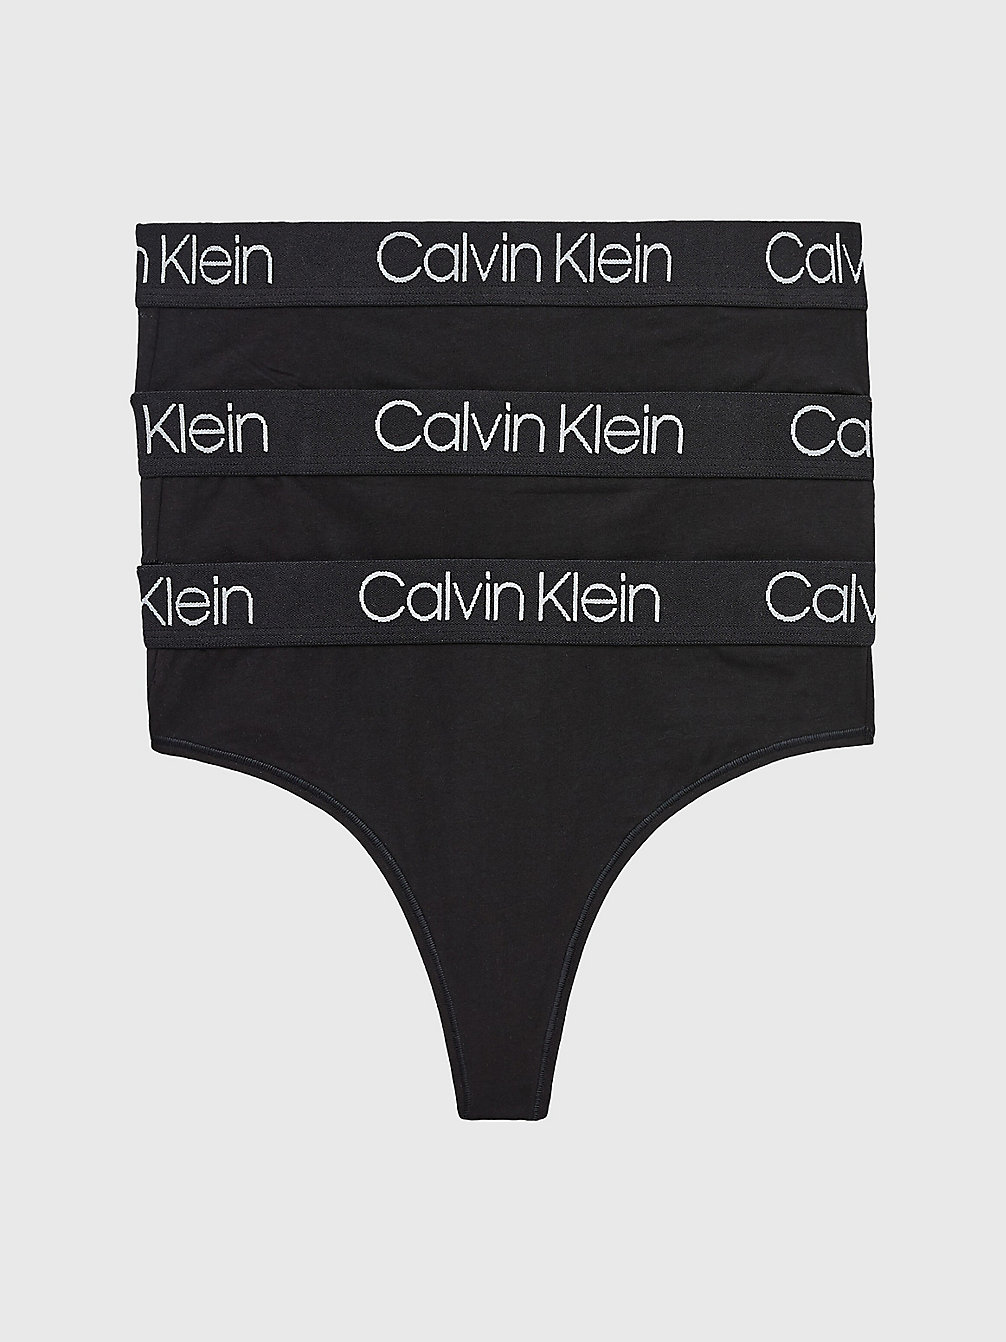 BLACK/ BLACK/ BLACK > Комплект стрингов с завышенной талией 3 шт. - Body > undefined Женщины - Calvin Klein